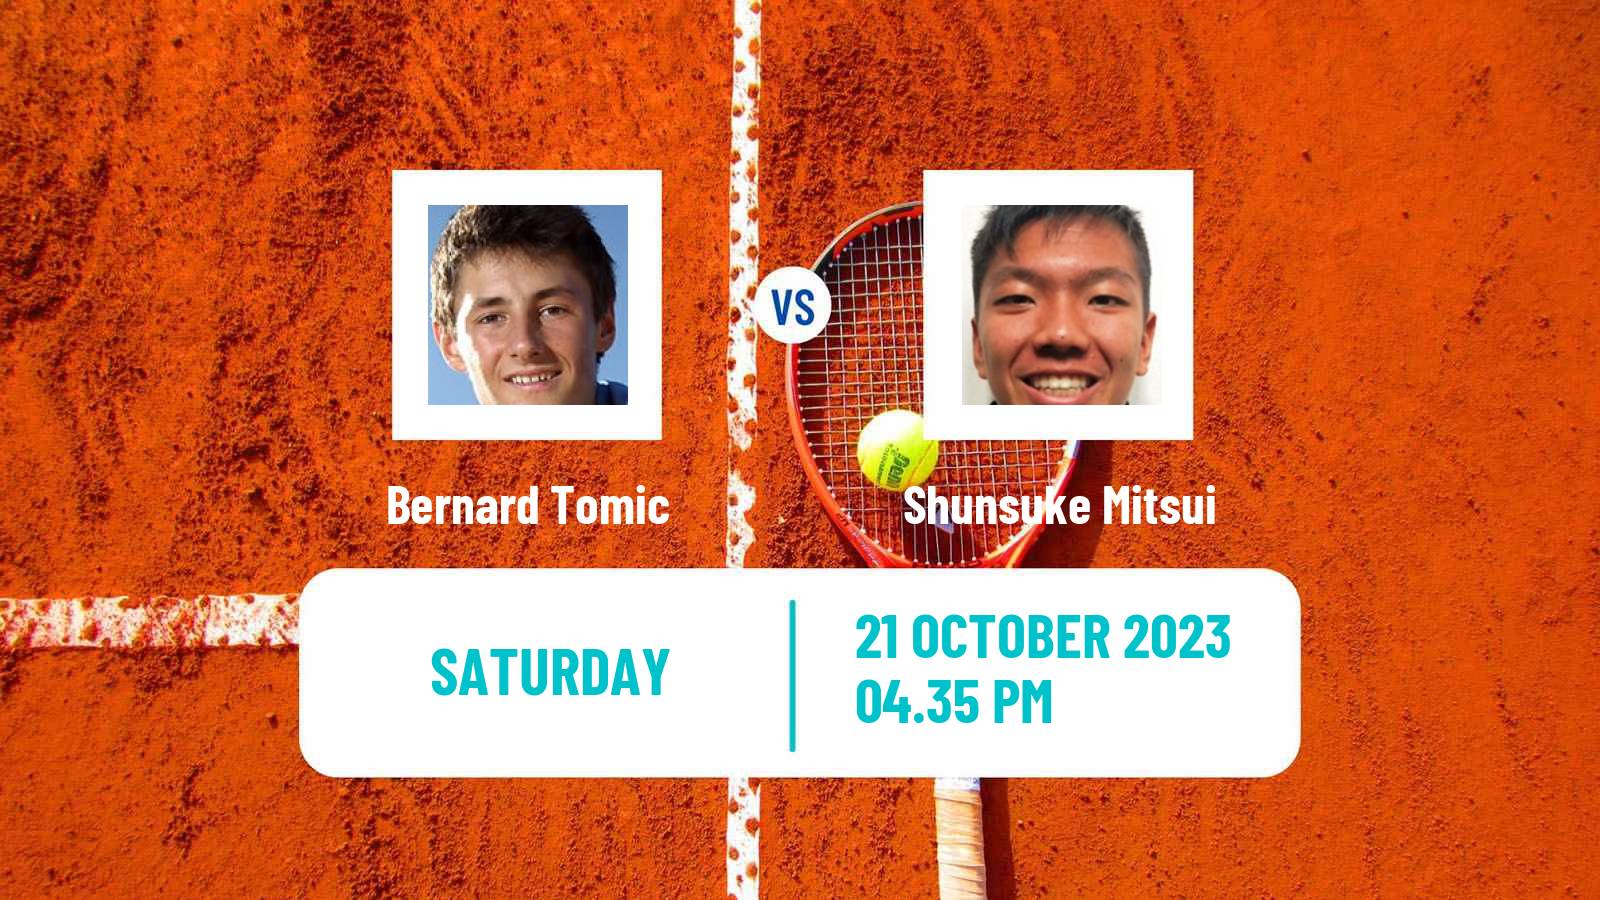 Tennis ITF M15 Las Vegas Nv Men Bernard Tomic - Shunsuke Mitsui